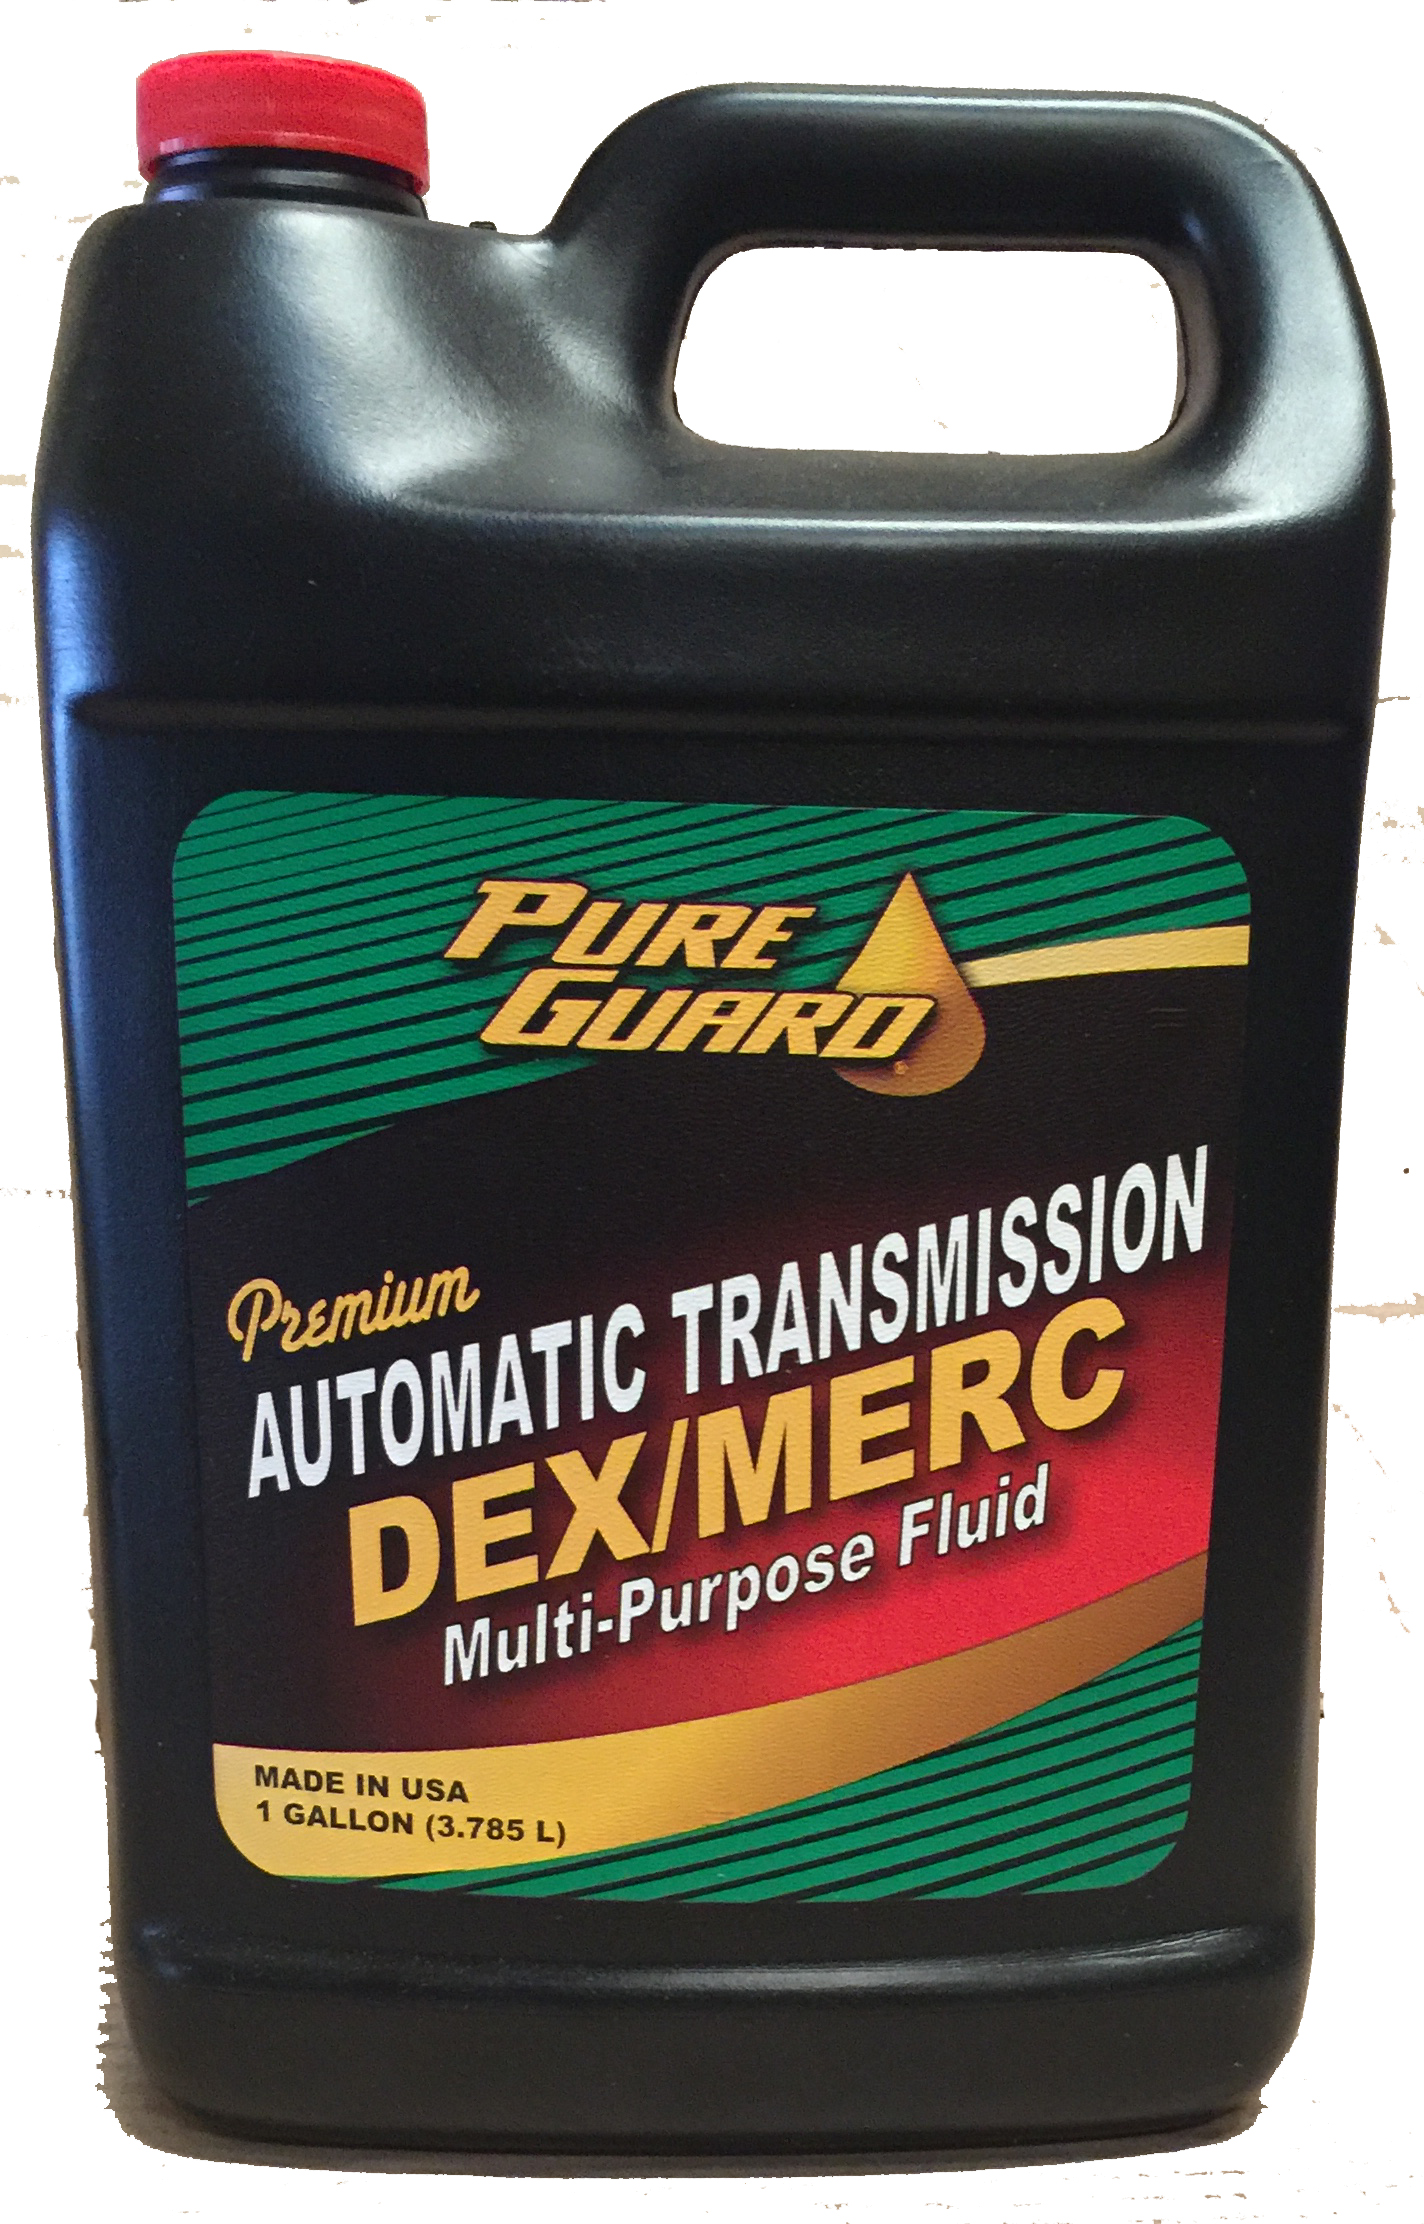 Pure Guard Automatic Transmission Fluid Image